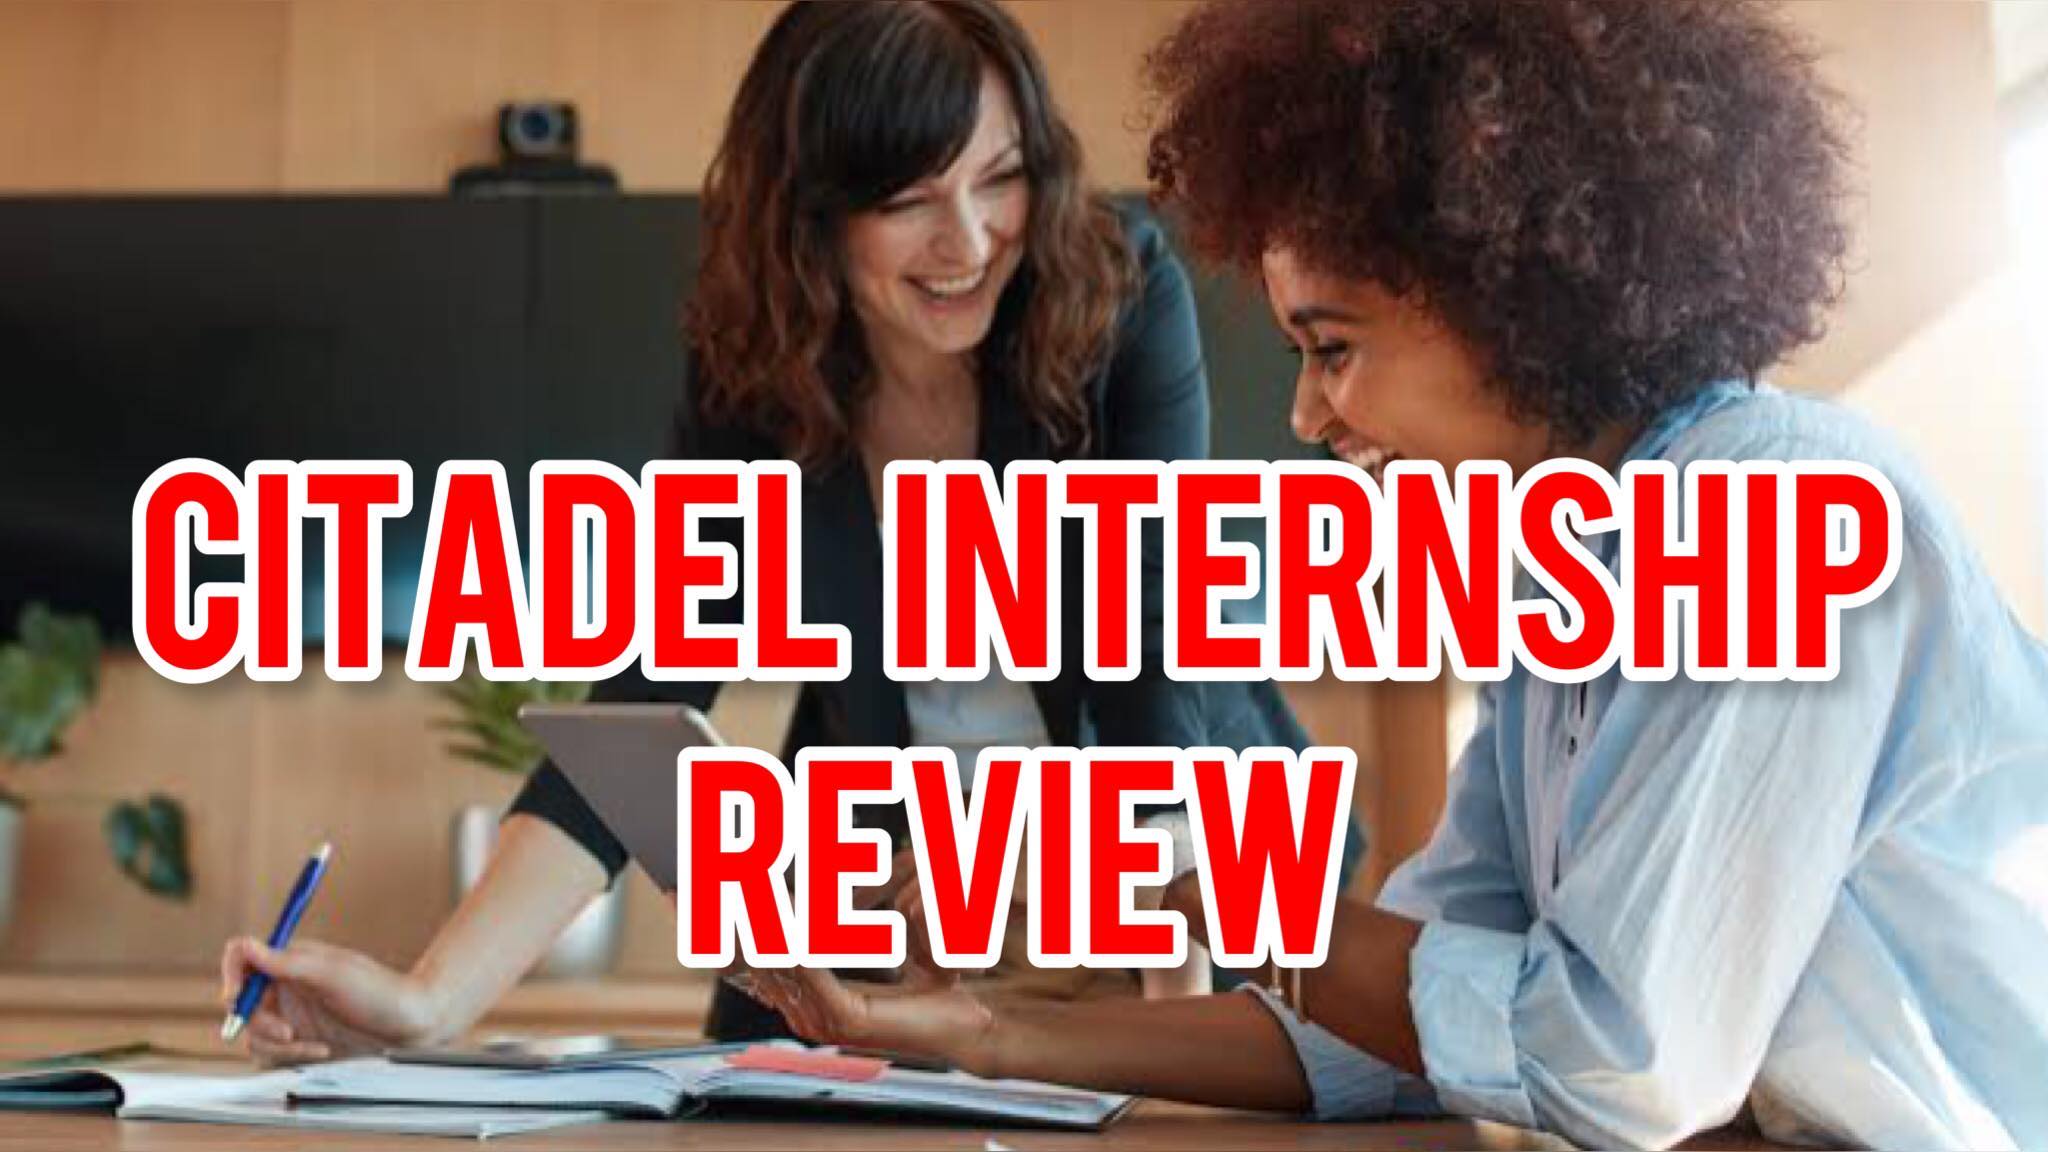 Citadel Internship Review